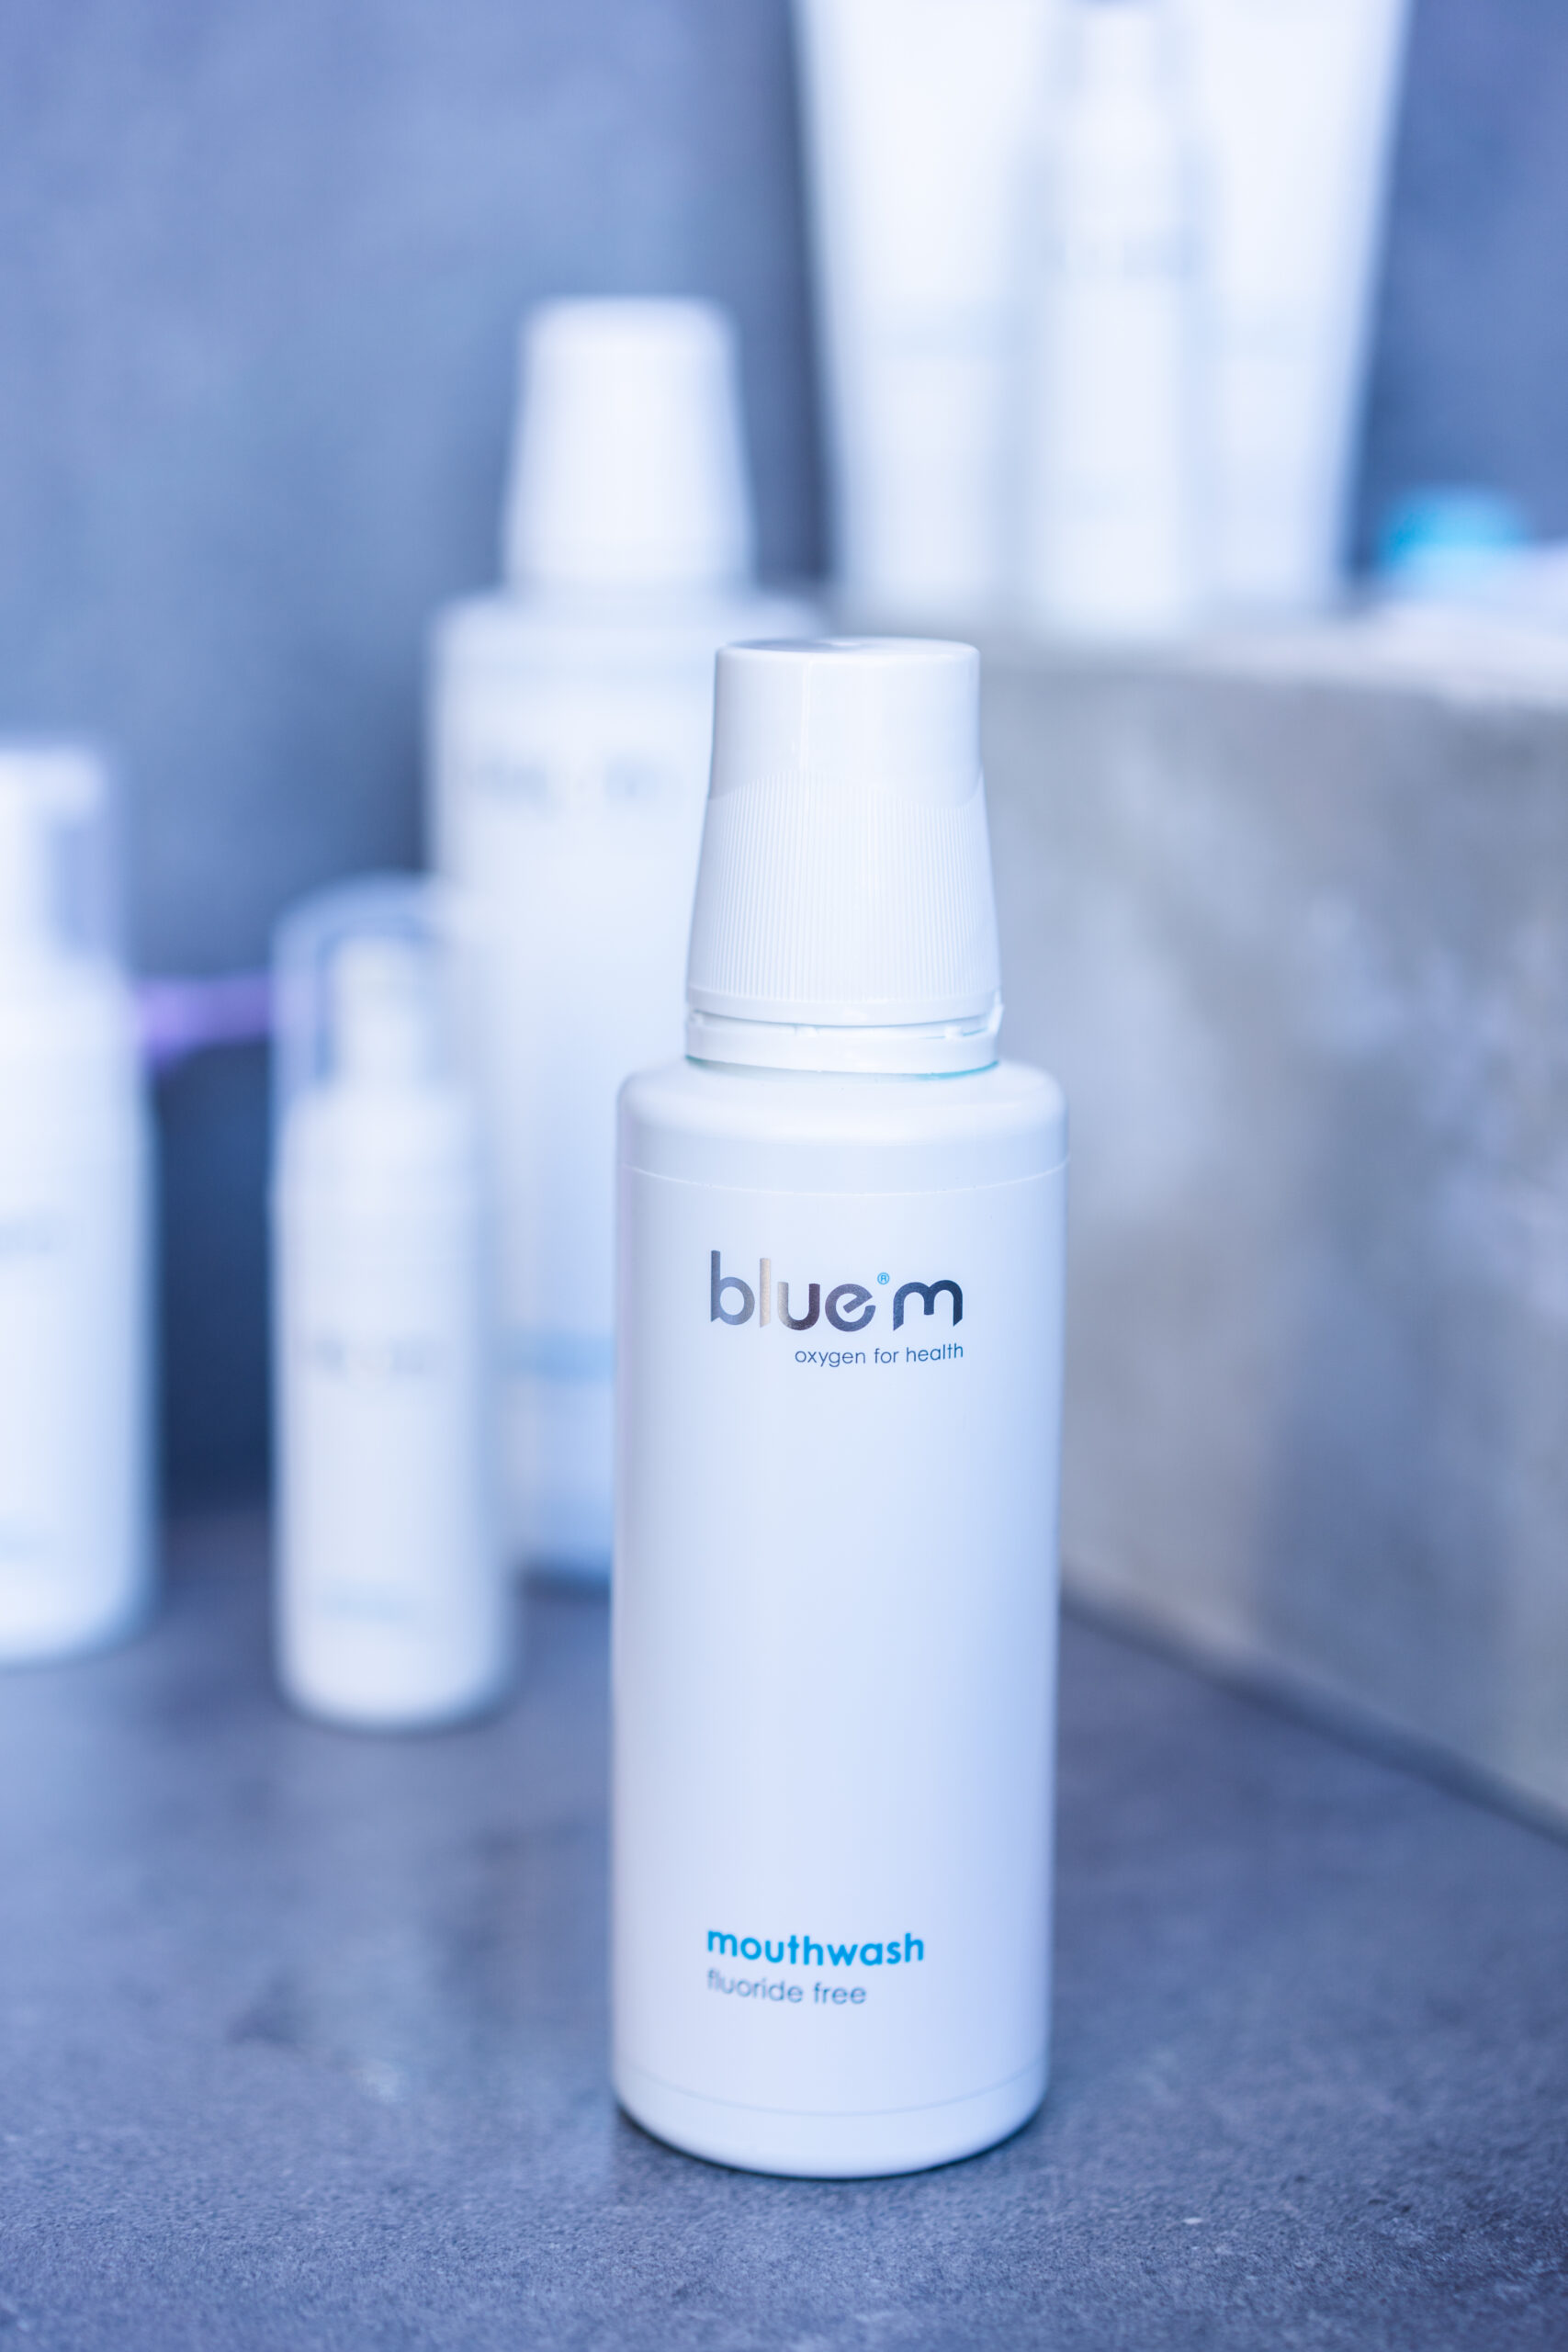 bluem products